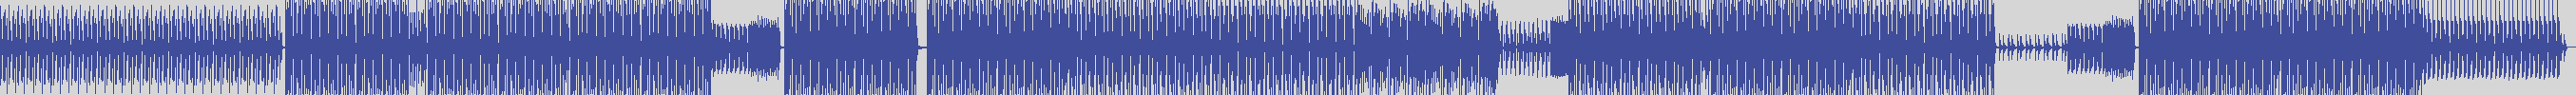 atomic_recordings [AR001] Enrico Persi, Luca Fregonese - Mel One [Palmez Club] audio wave form